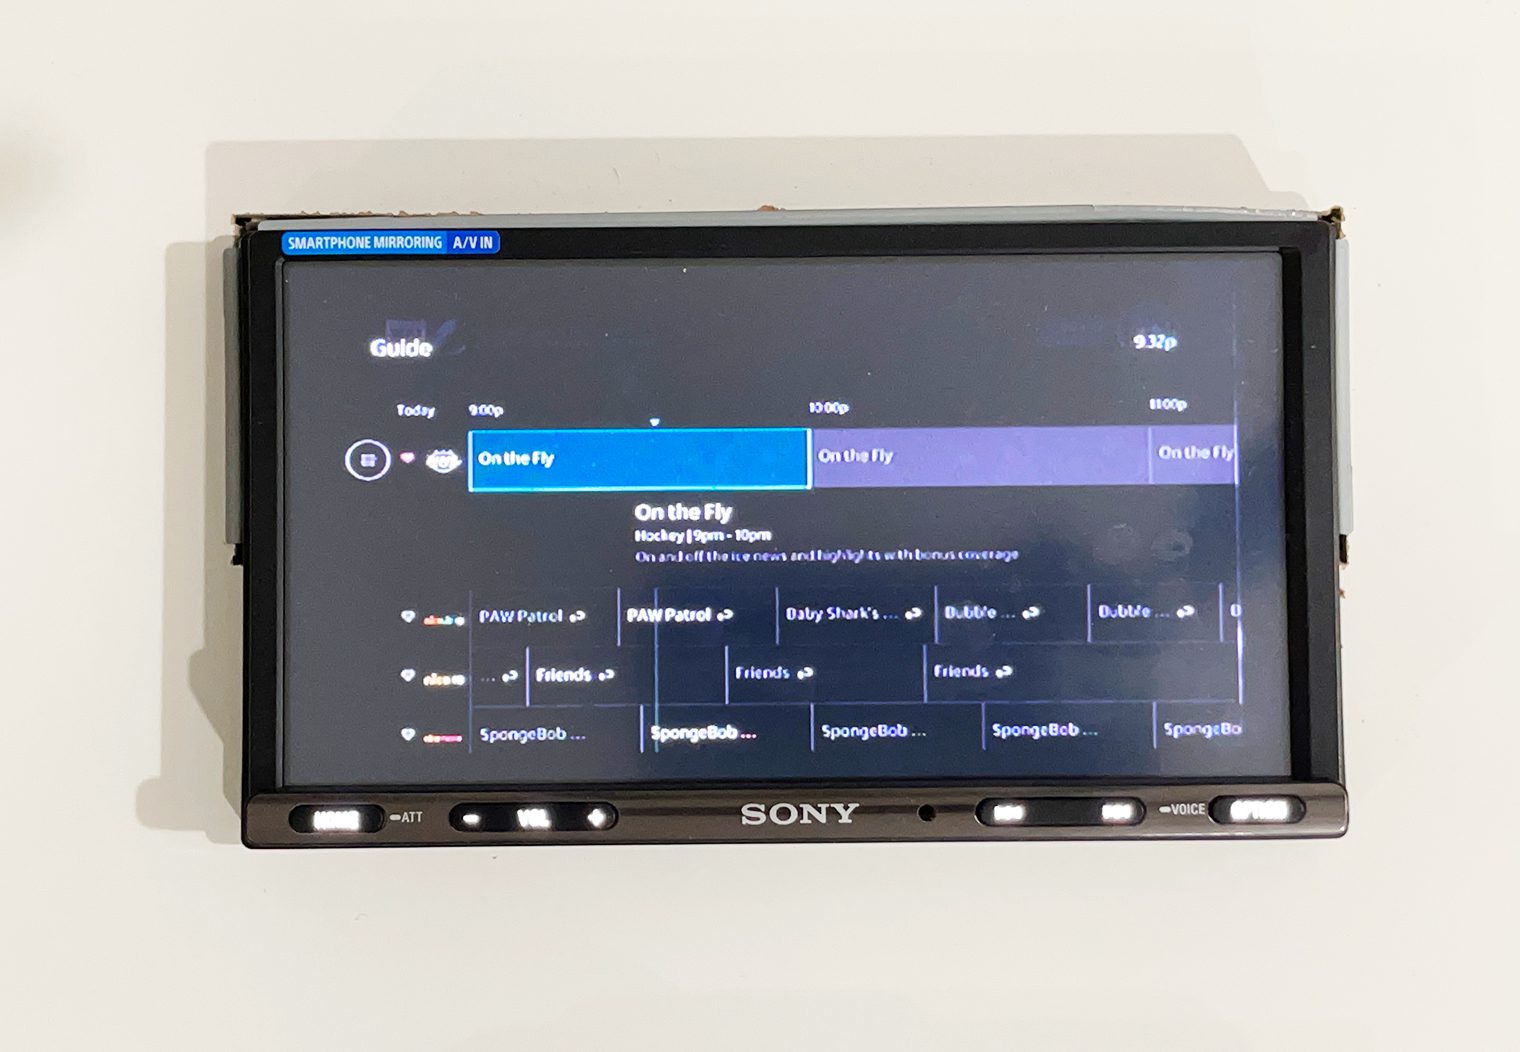 Sony XAV-AX3200 DirecTV Guide